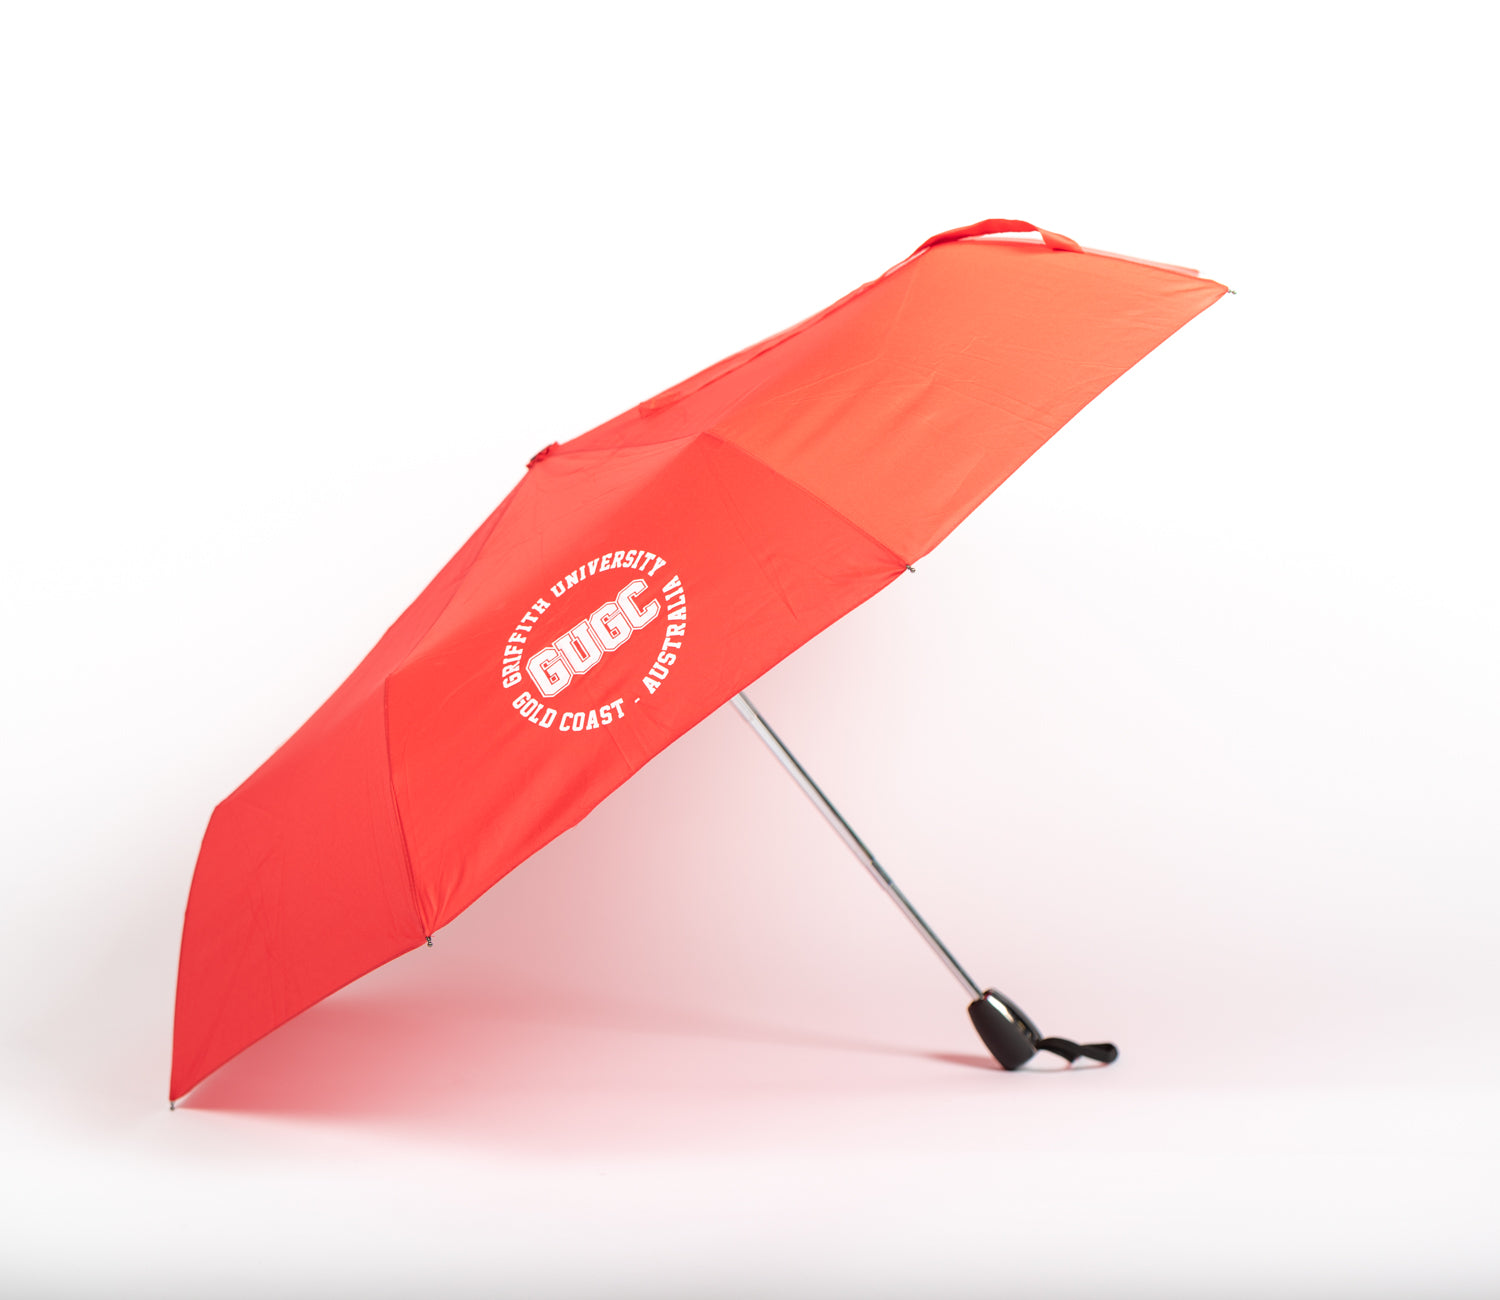 Griffith umbrella